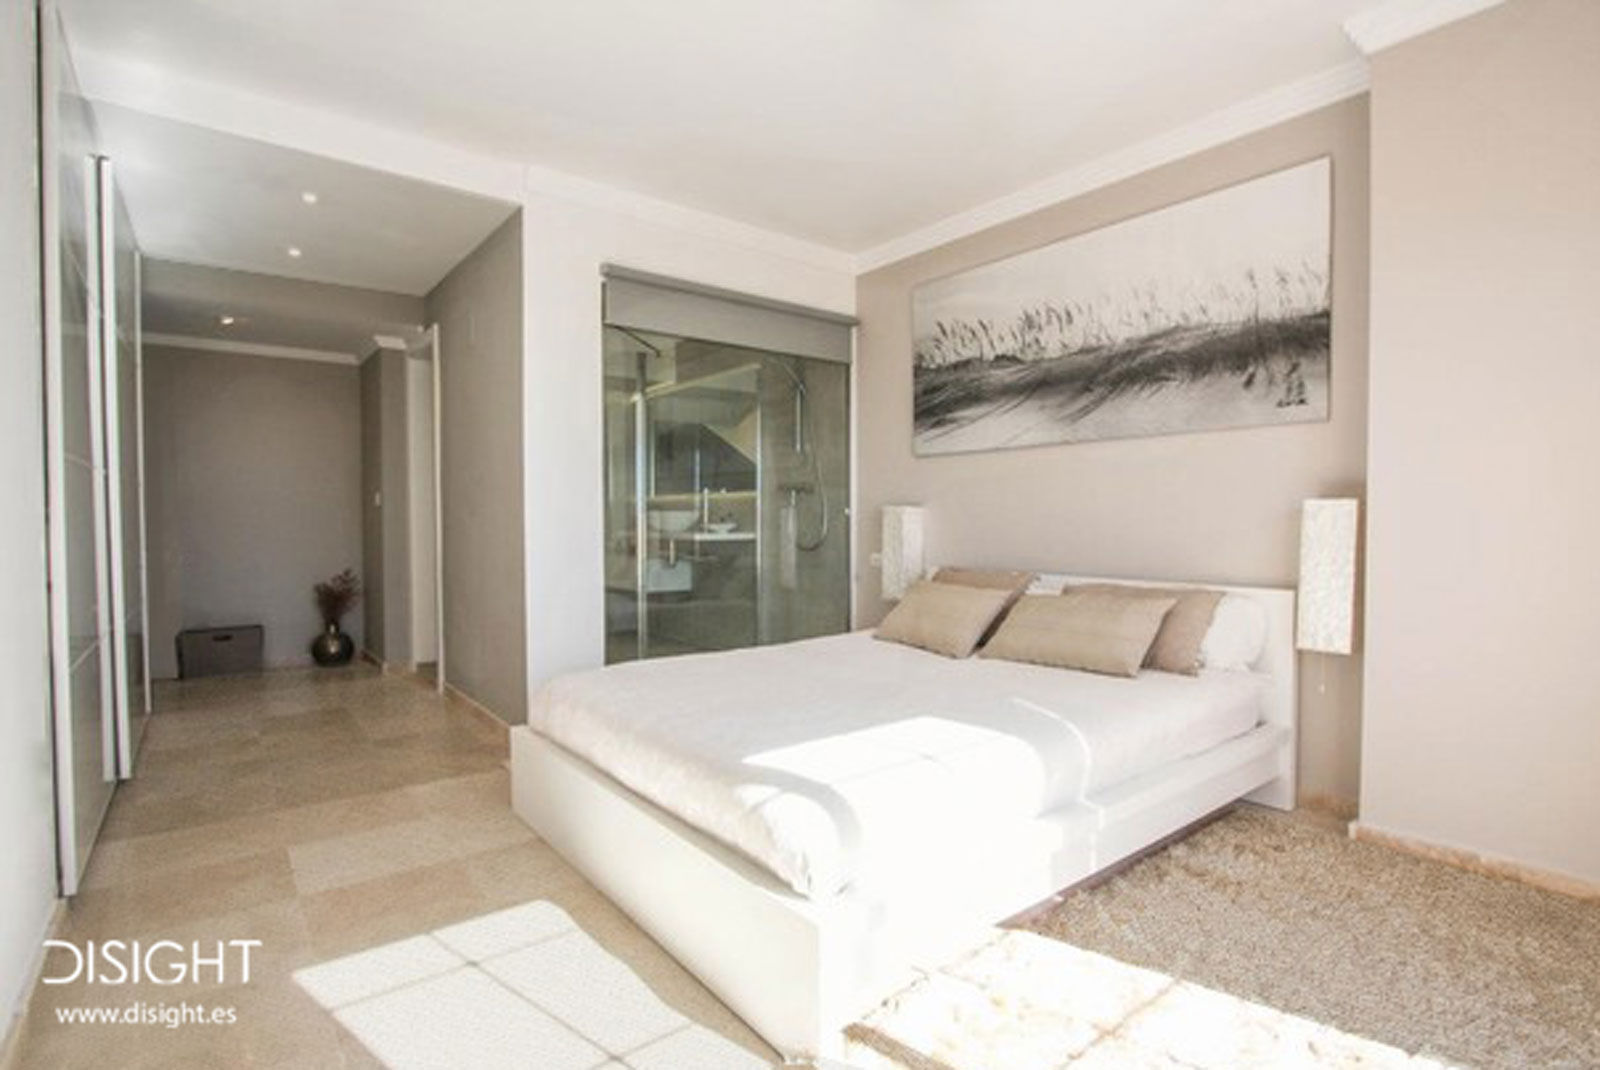 Residencial Atico Rio Real Marbella, DISIGHT DISIGHT غرفة نوم